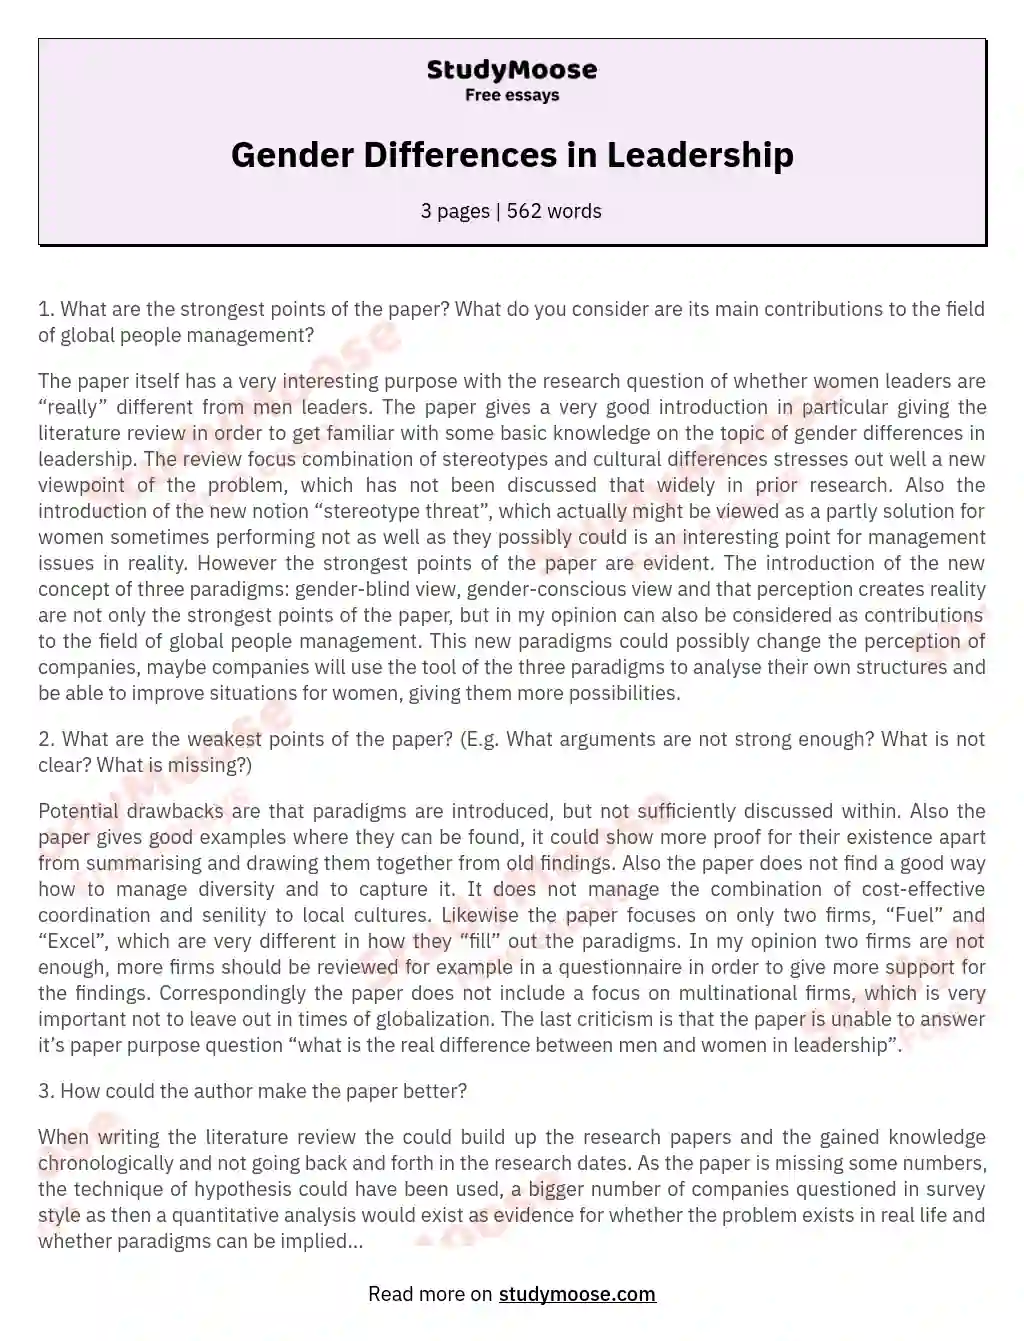 Gender Differences in Leadership essay